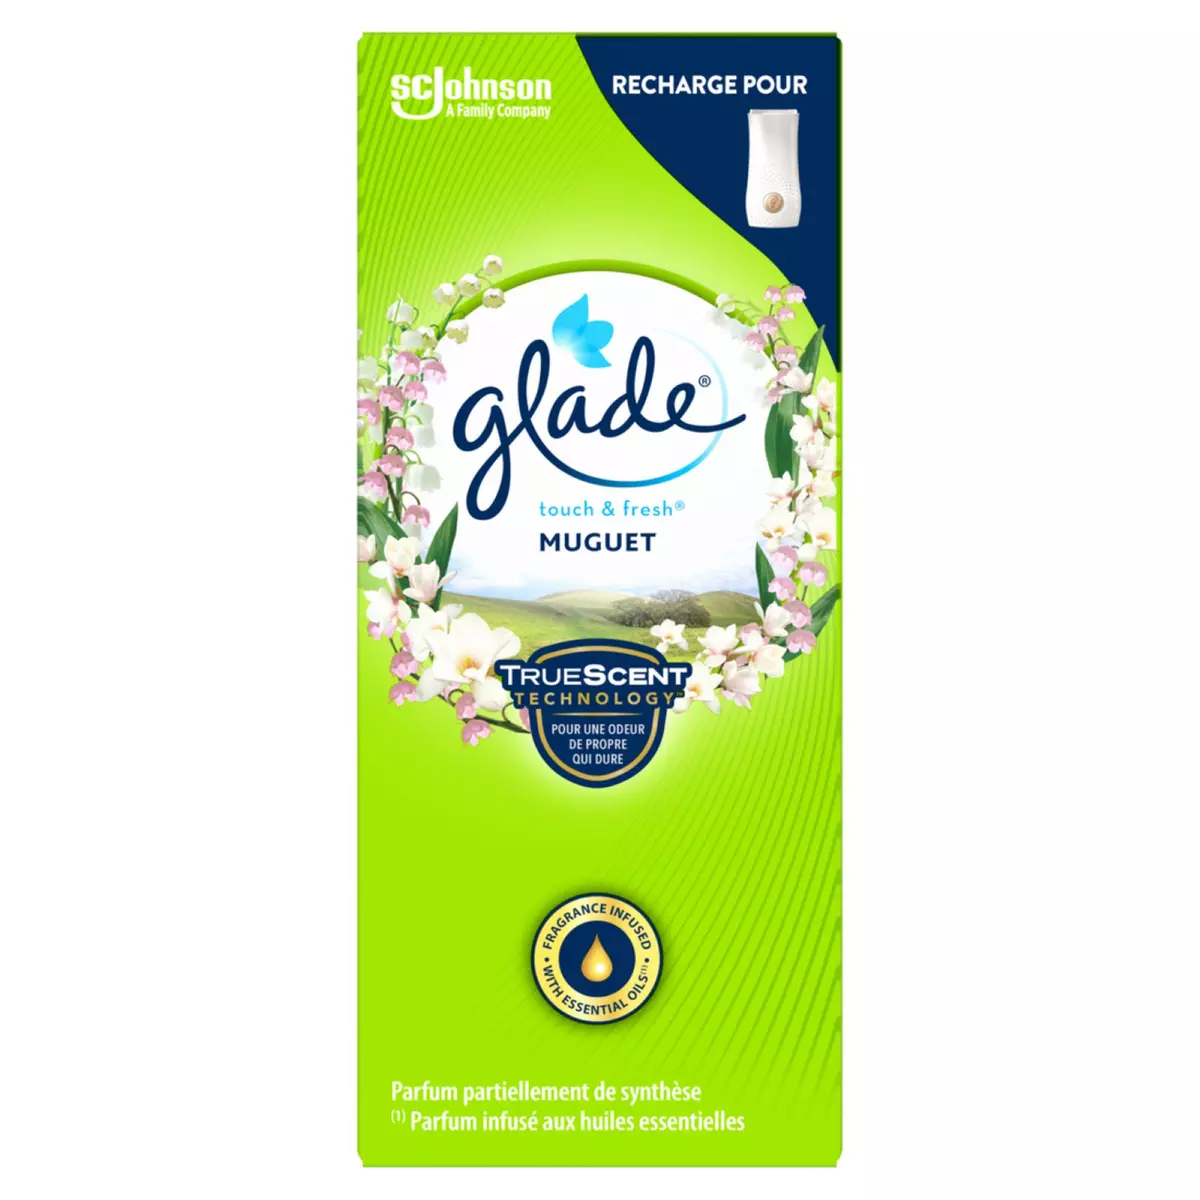 GLADE Touch & fresh Recharge pour diffuseur muguet 10ml